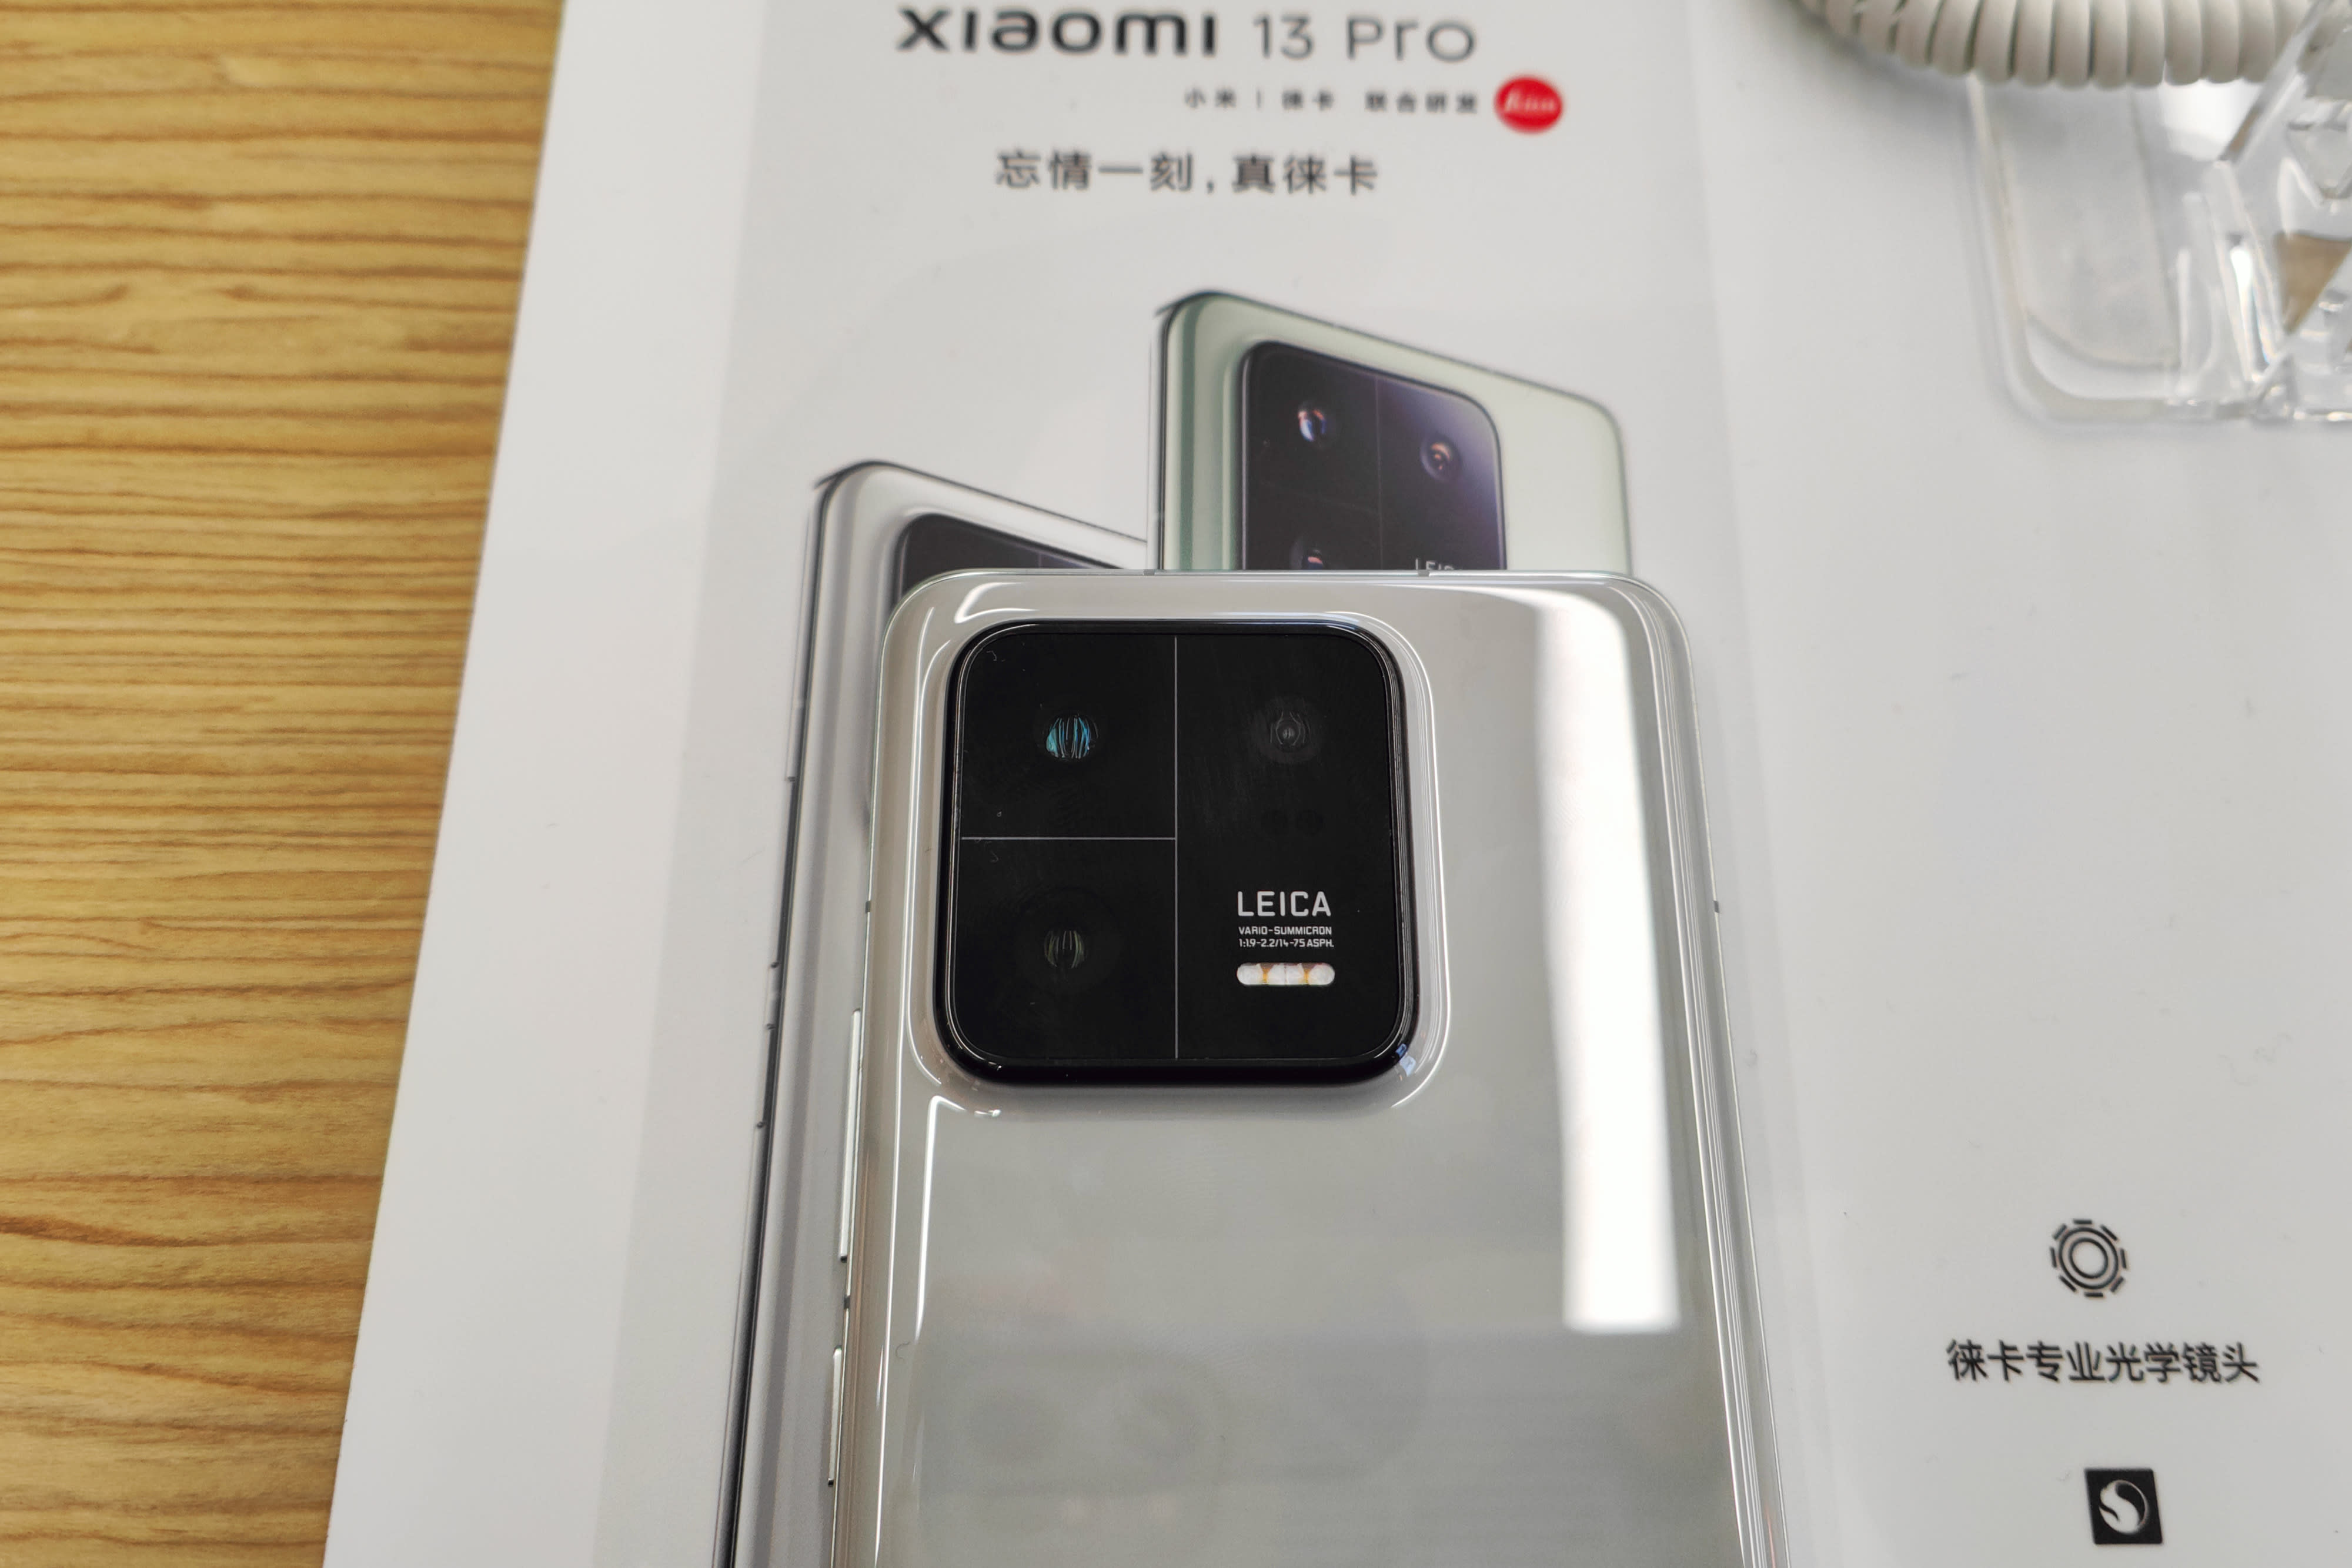 Xiaomi 13 Pro launch: Specs, price, availability